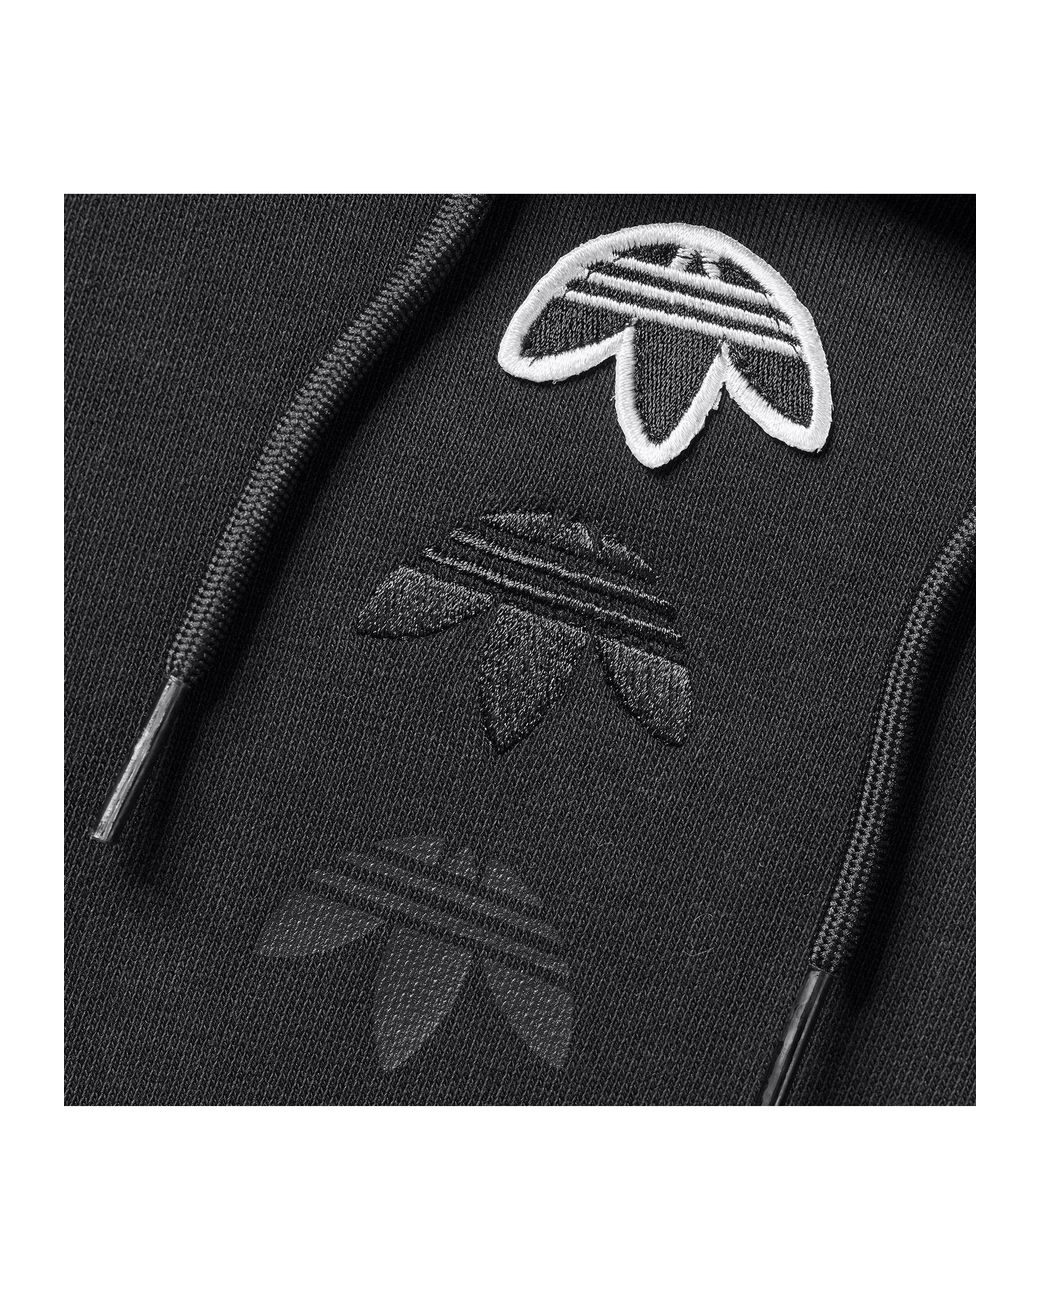 Alexander Wang Adidas Originals By Aw Logo Hoodie in Black for Men